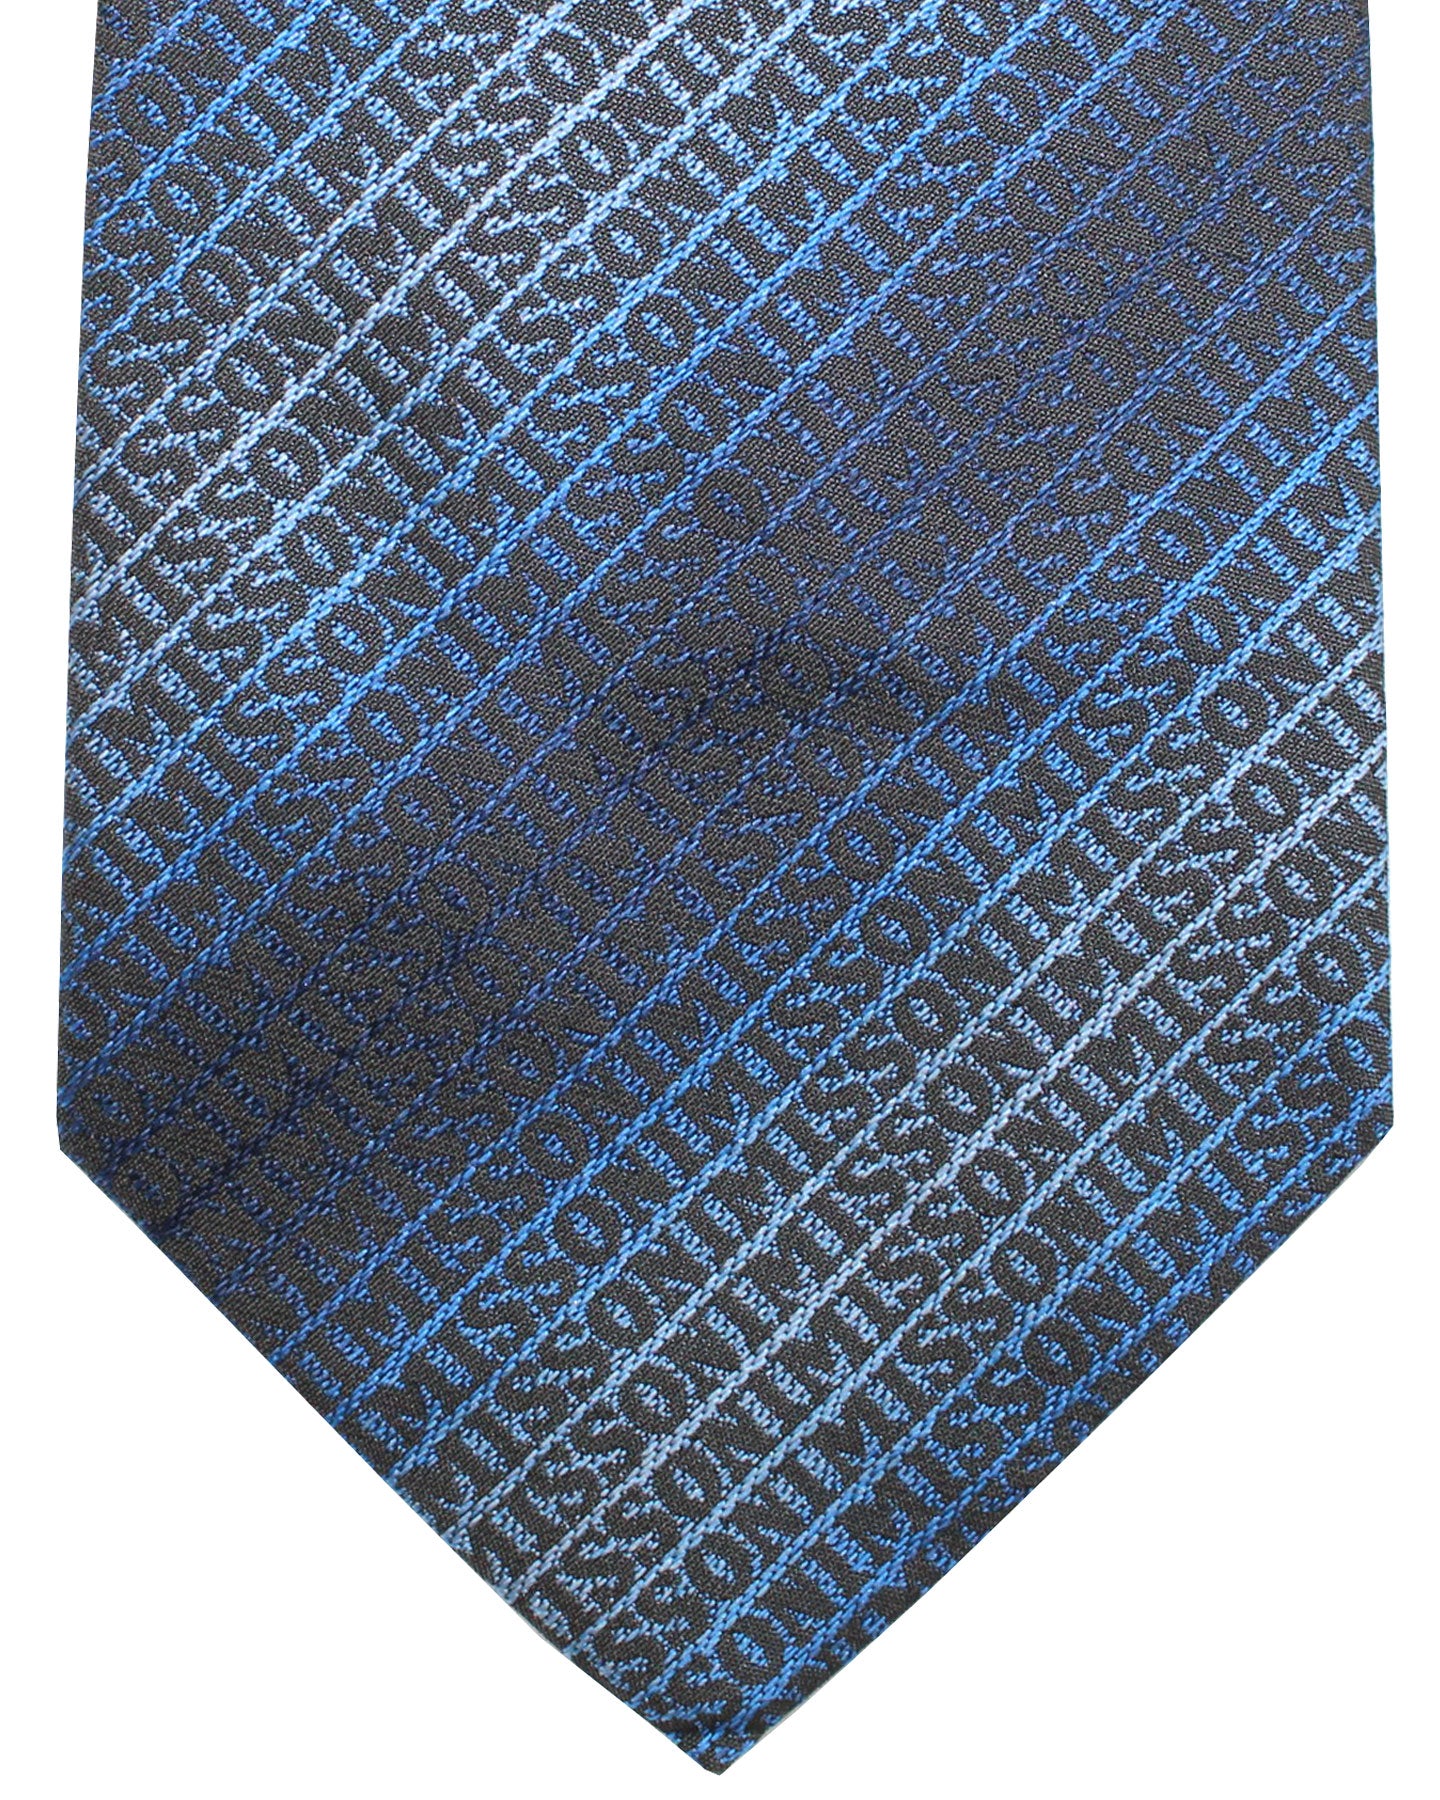 Missoni Tie Blue Logo Stripes Design - Hand Made Italy